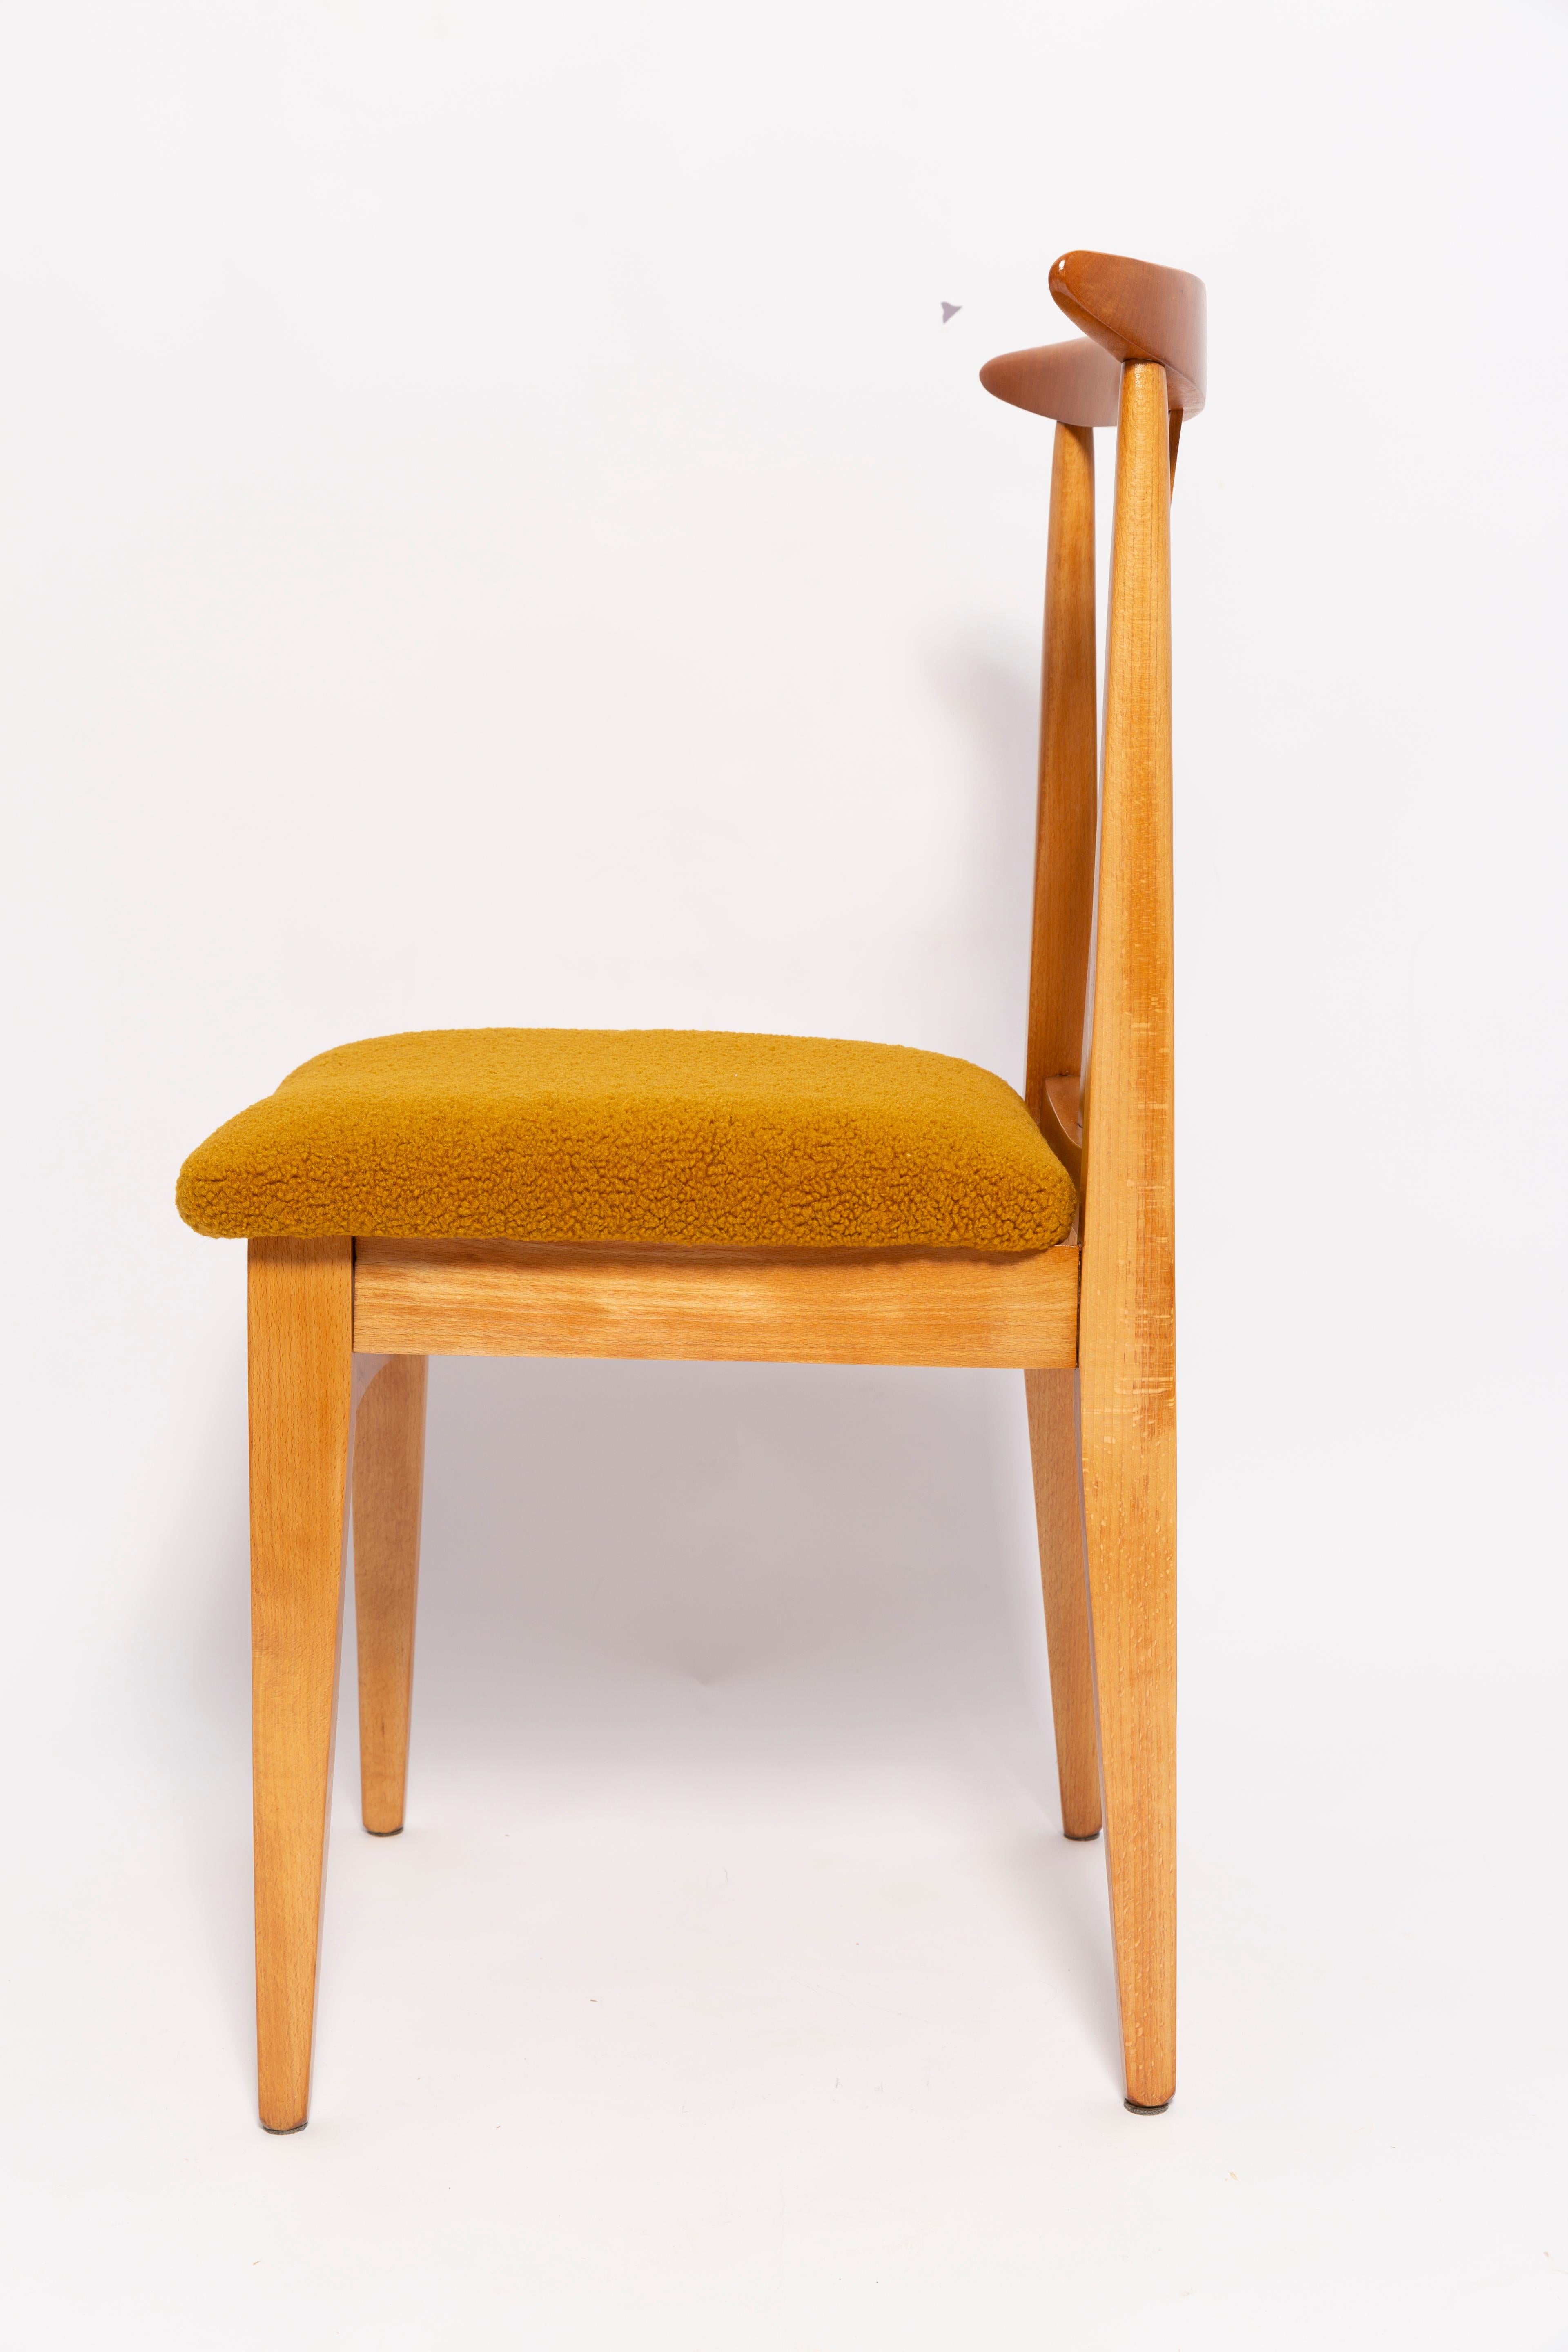 20th Century Mid-Century Ochre Boucle Chair, Light Wood, M. Zielinski, Europe 1960s For Sale